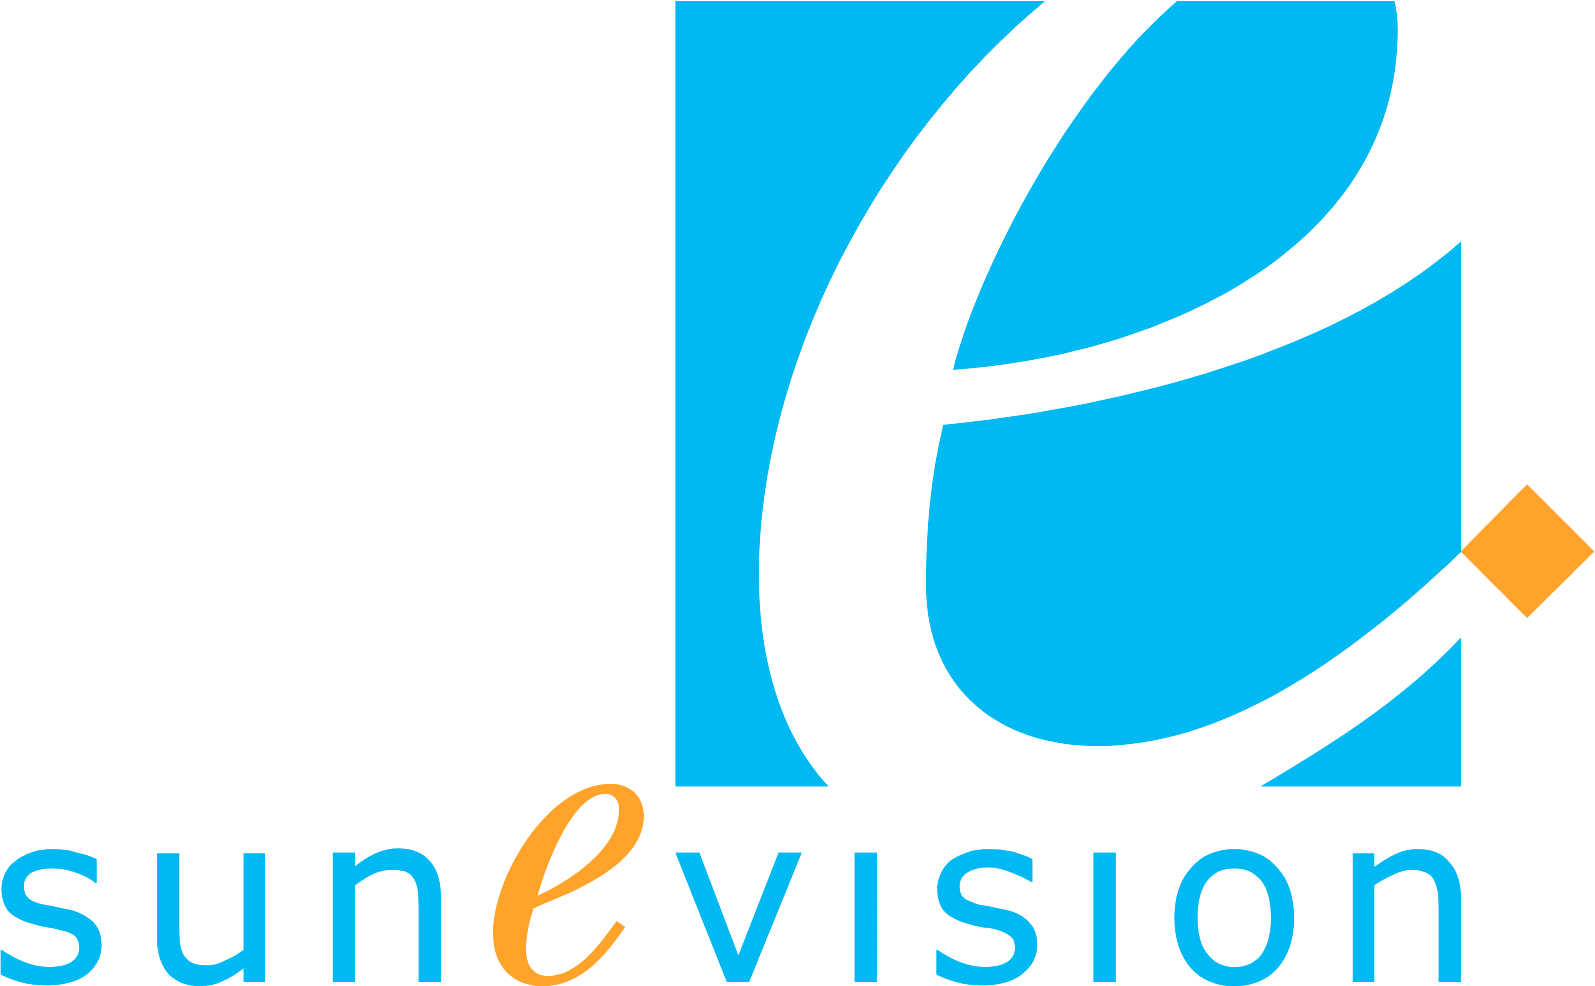 SUNeVision logo large (transparent PNG)